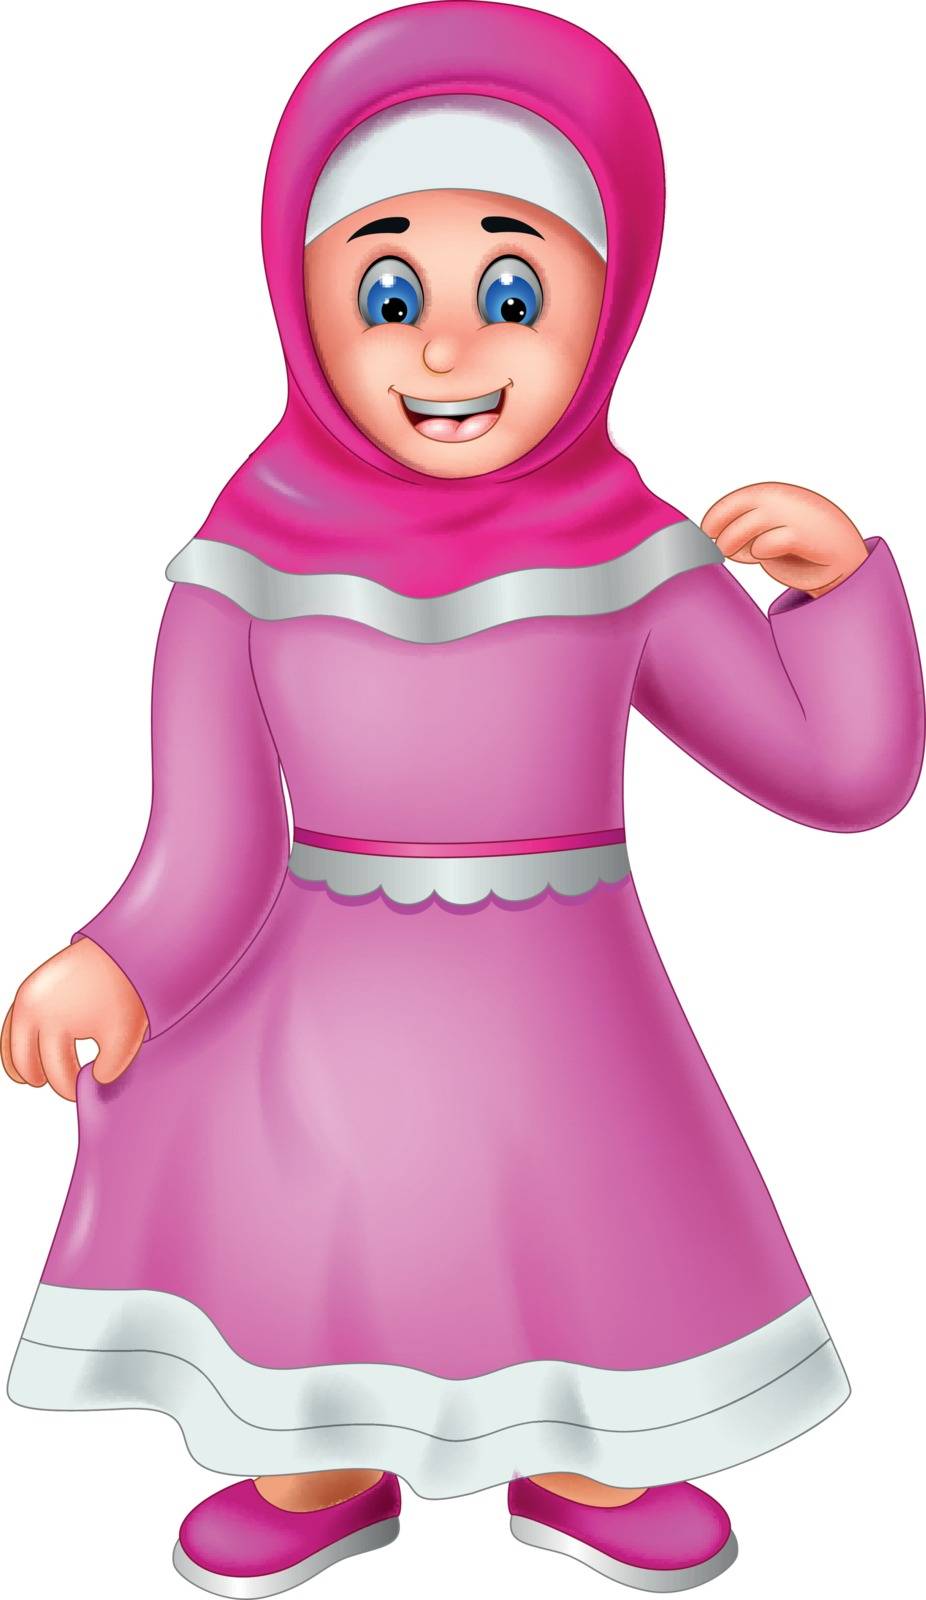 Beautiful Woman In Pink Dress and Pink Hijab Veil Cartoon by sujono